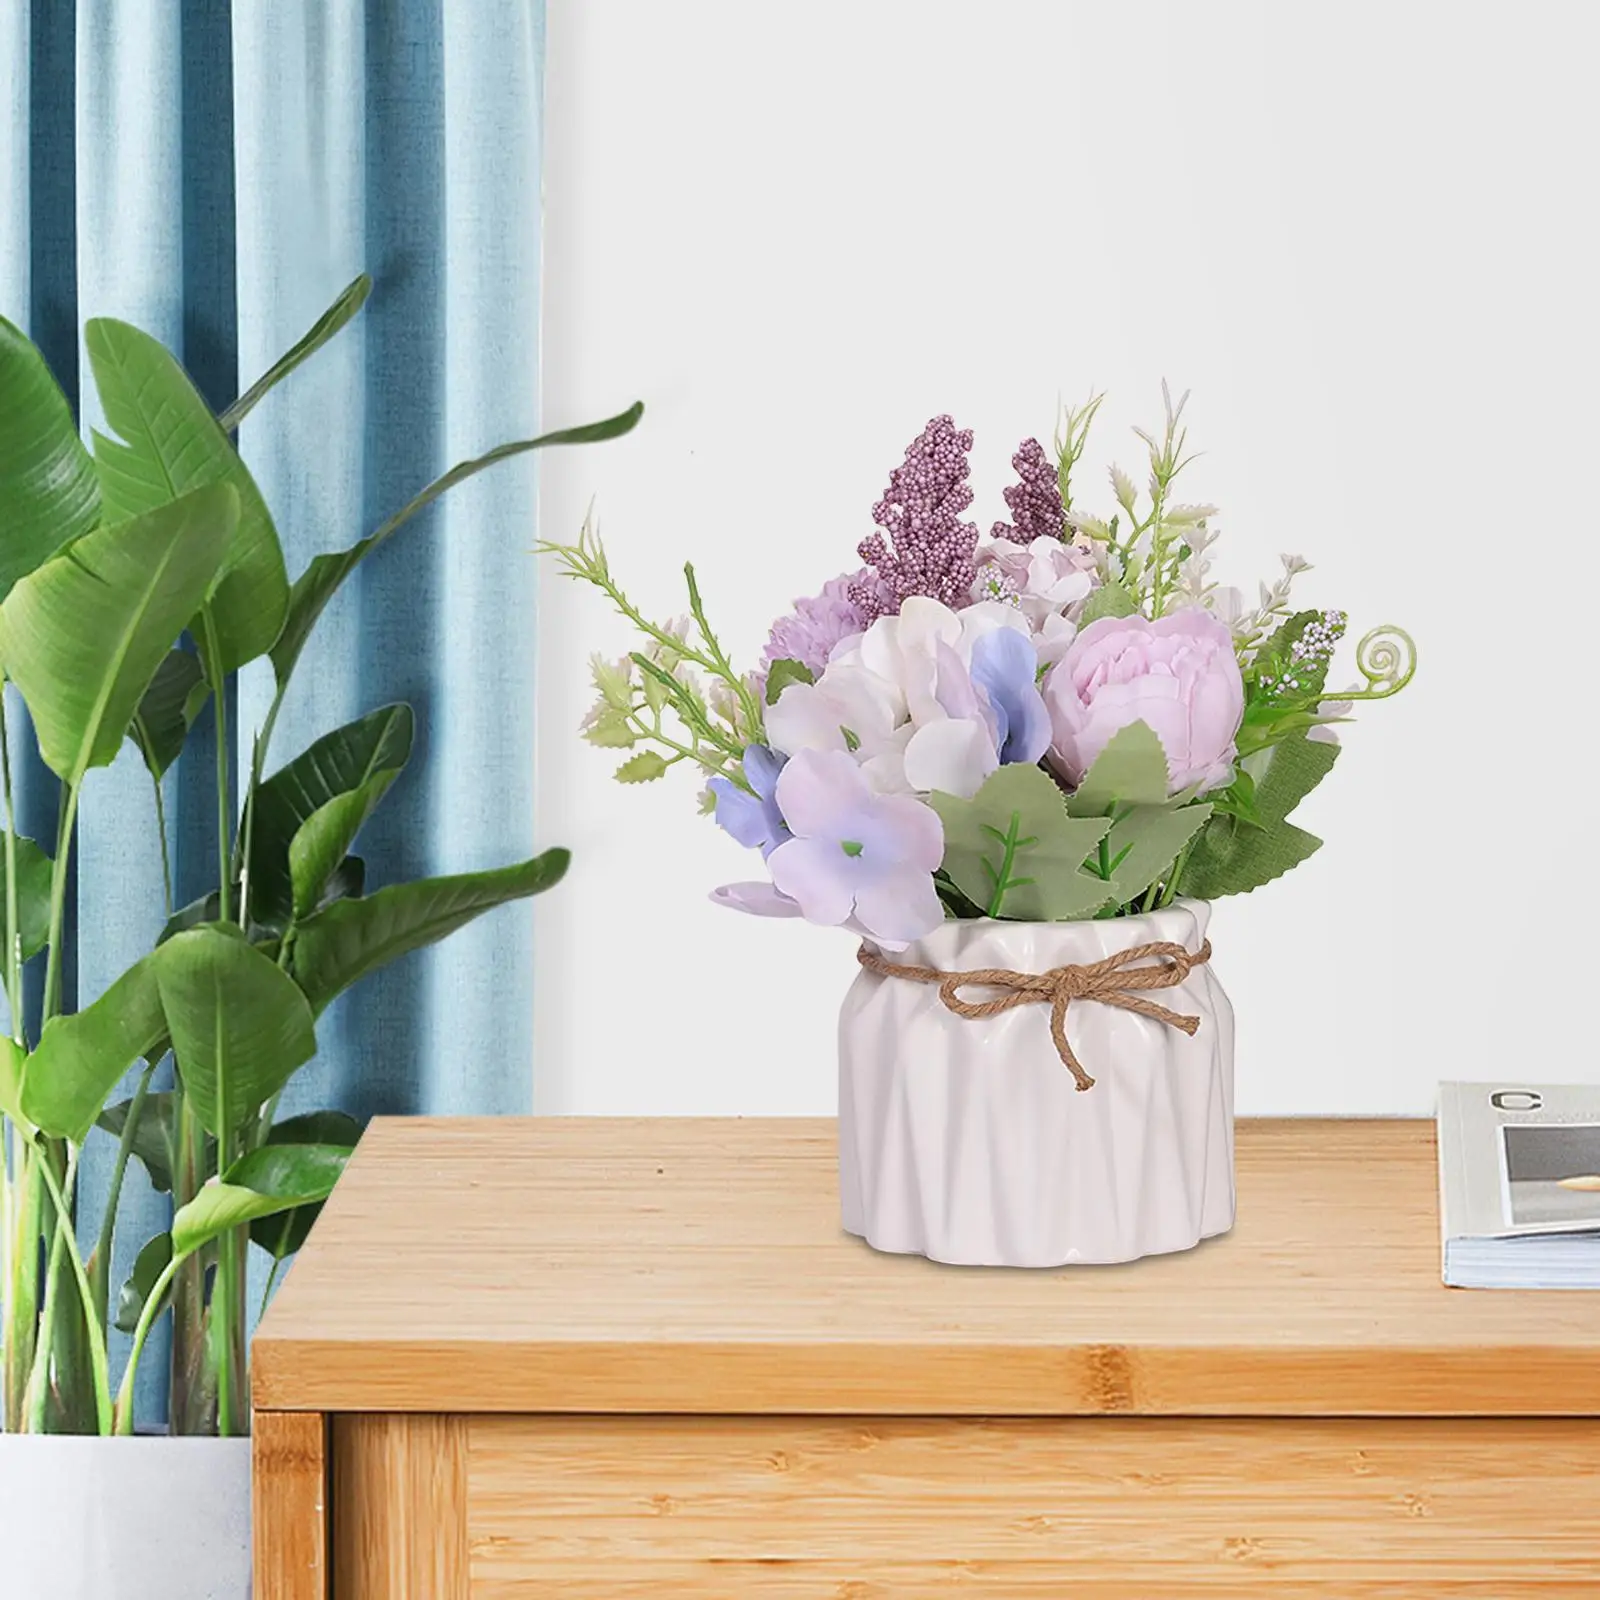 Mini Artificial Flowers Hydrangea Bonsai, with Ceramic Vase Plant Floral Arrangement, for Home Party Decor Ornament Gift